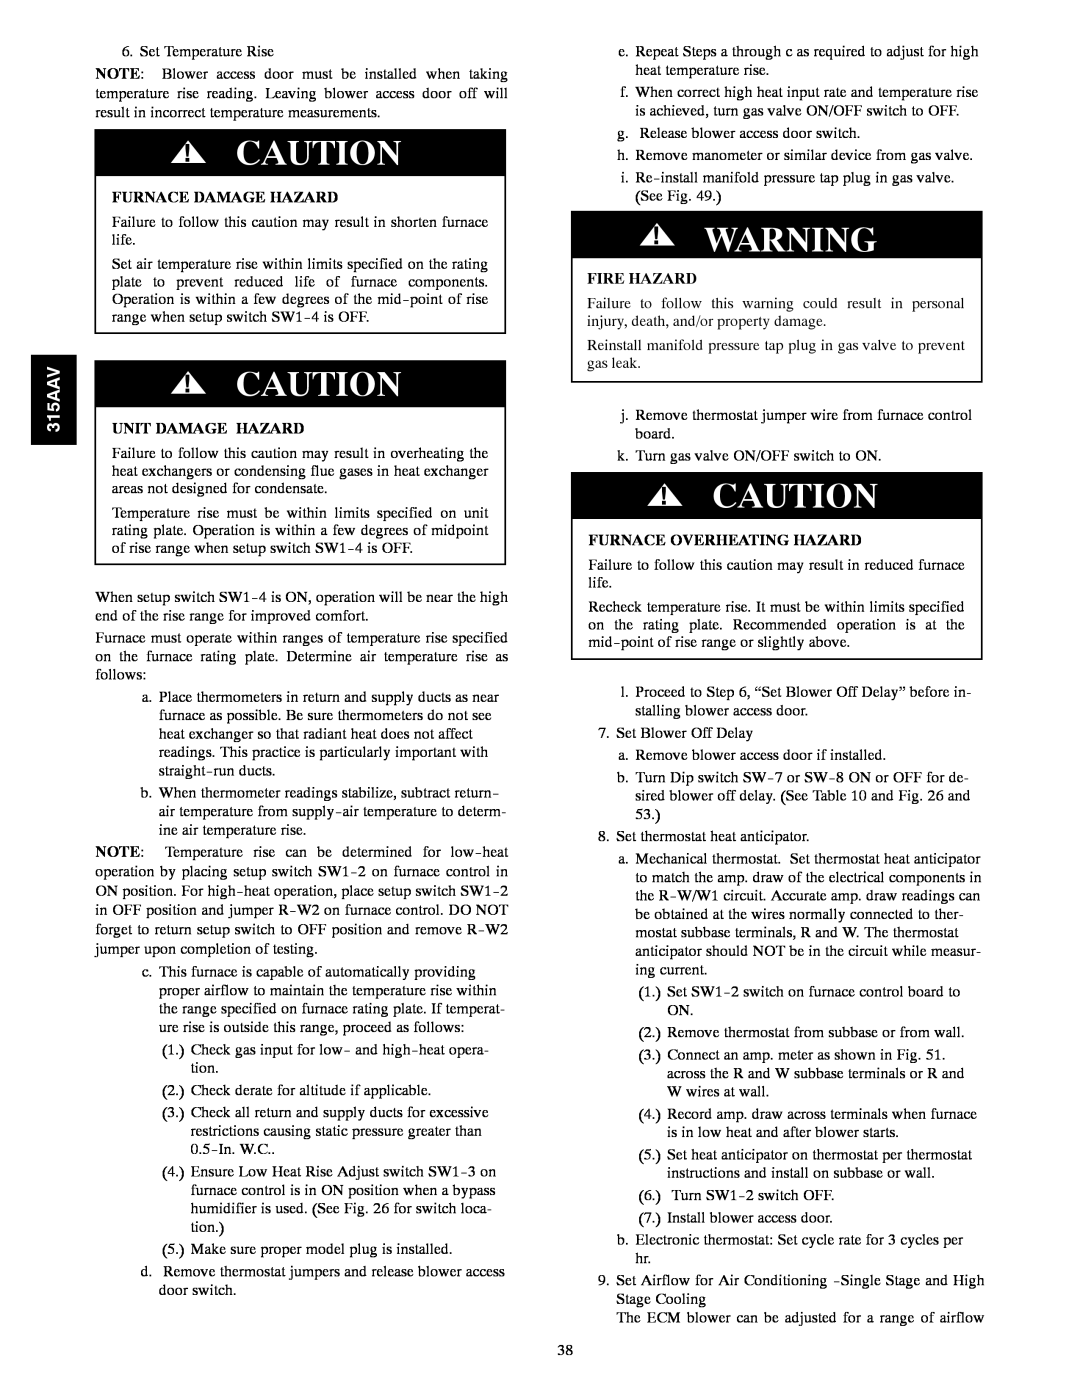 Bryant 315AAV instruction manual Unit Damage Hazard, Furnace Overheating Hazard, Furnace Damage Hazard, Fire Hazard 